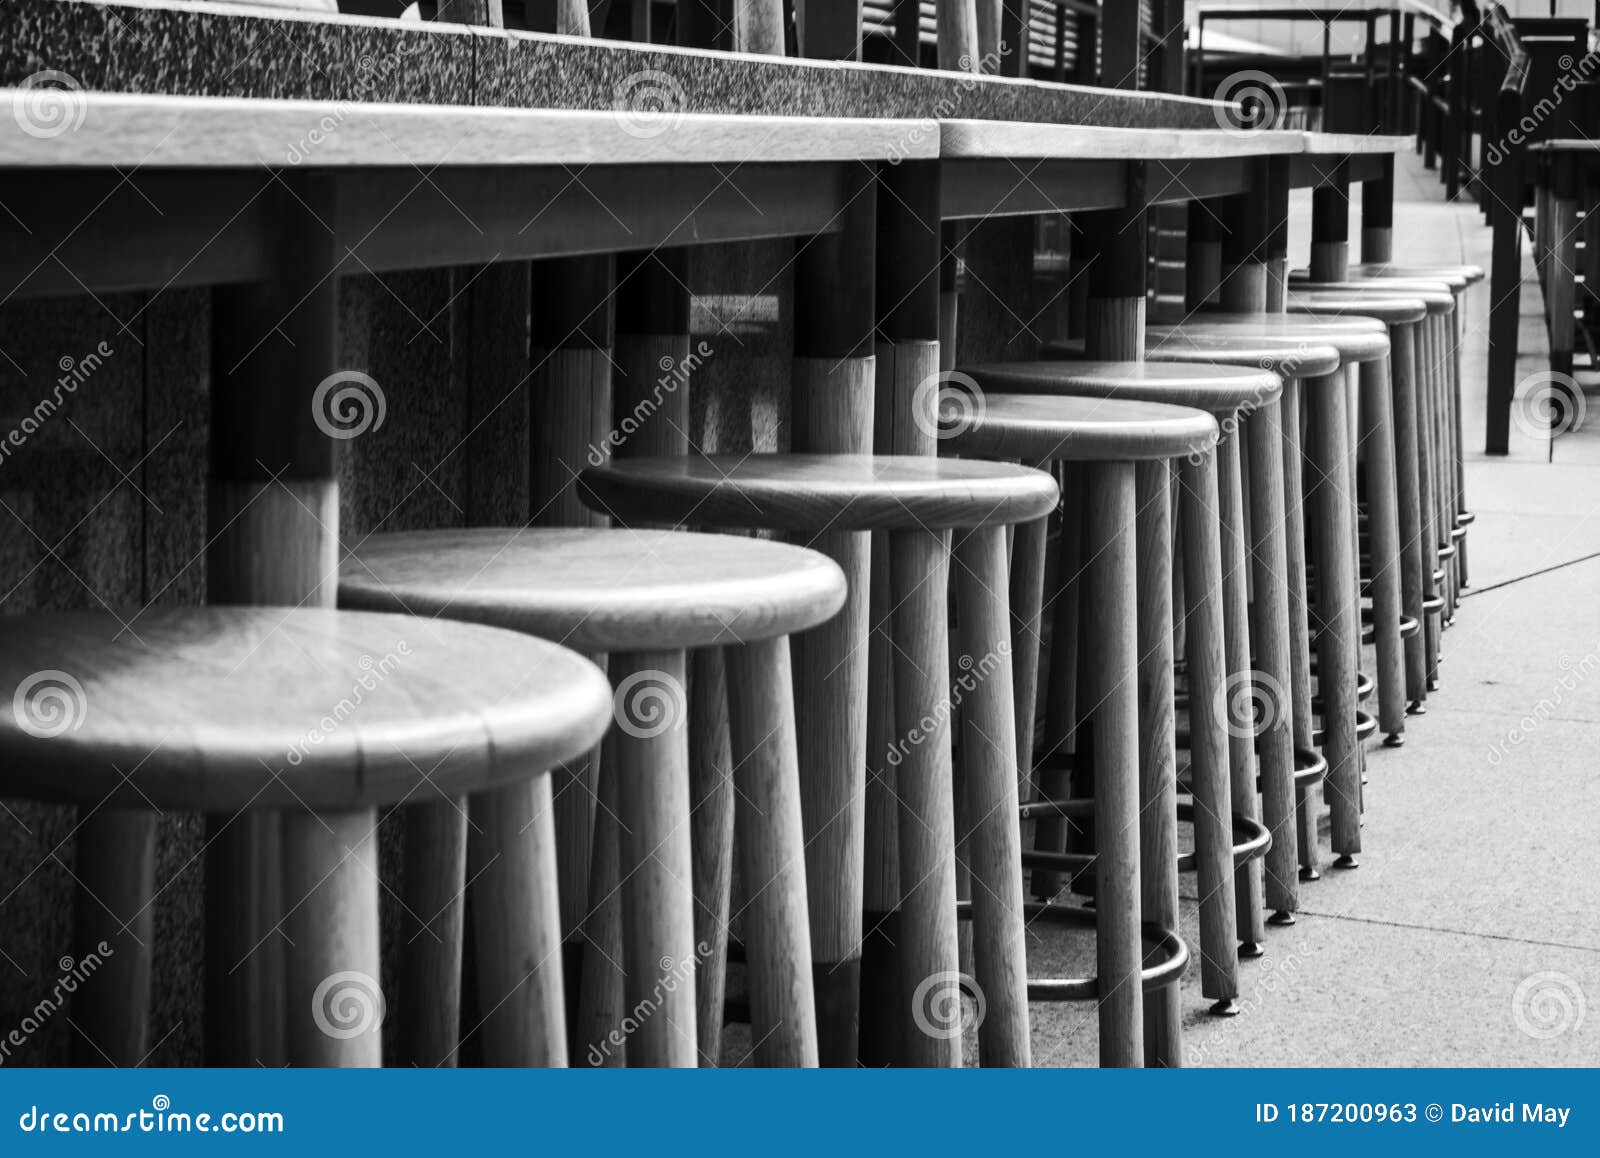 wooden bar stools mono outdoor eatery